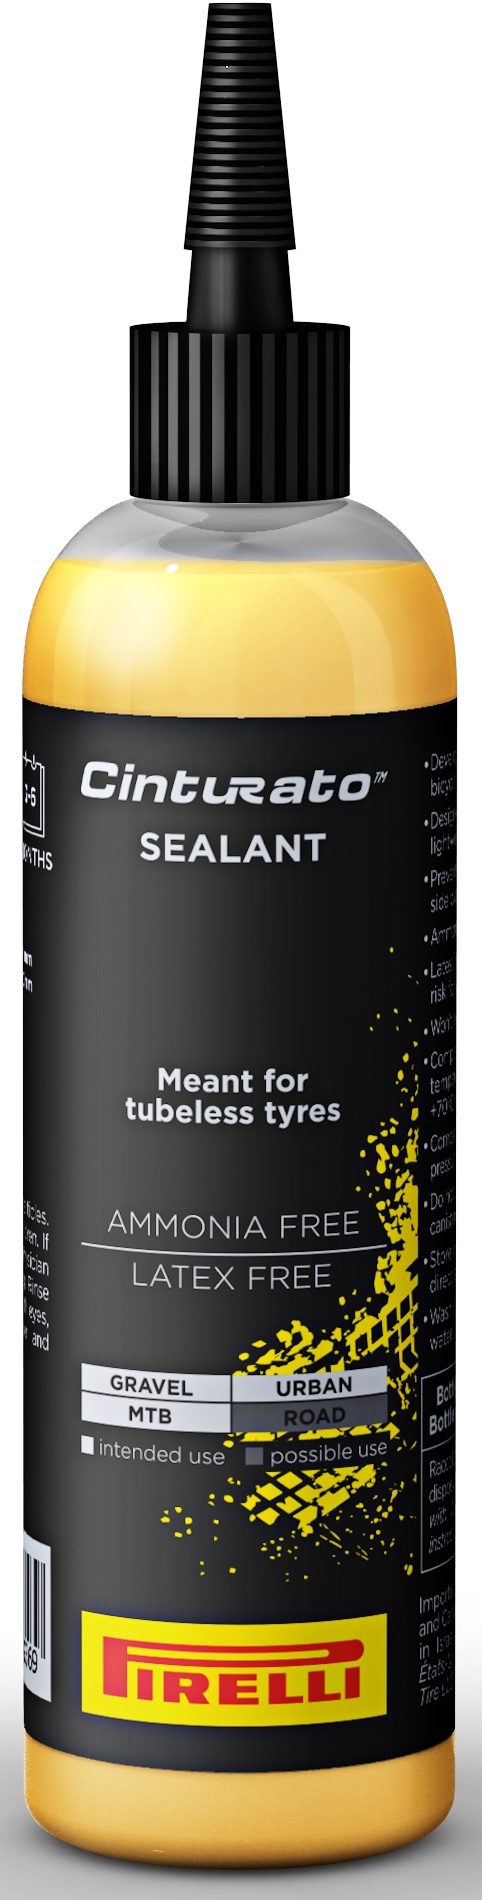 Se Pirelli Sealant Cinturato SmartSEAL Tubelessvæske 125ml hos Cykelexperten.dk